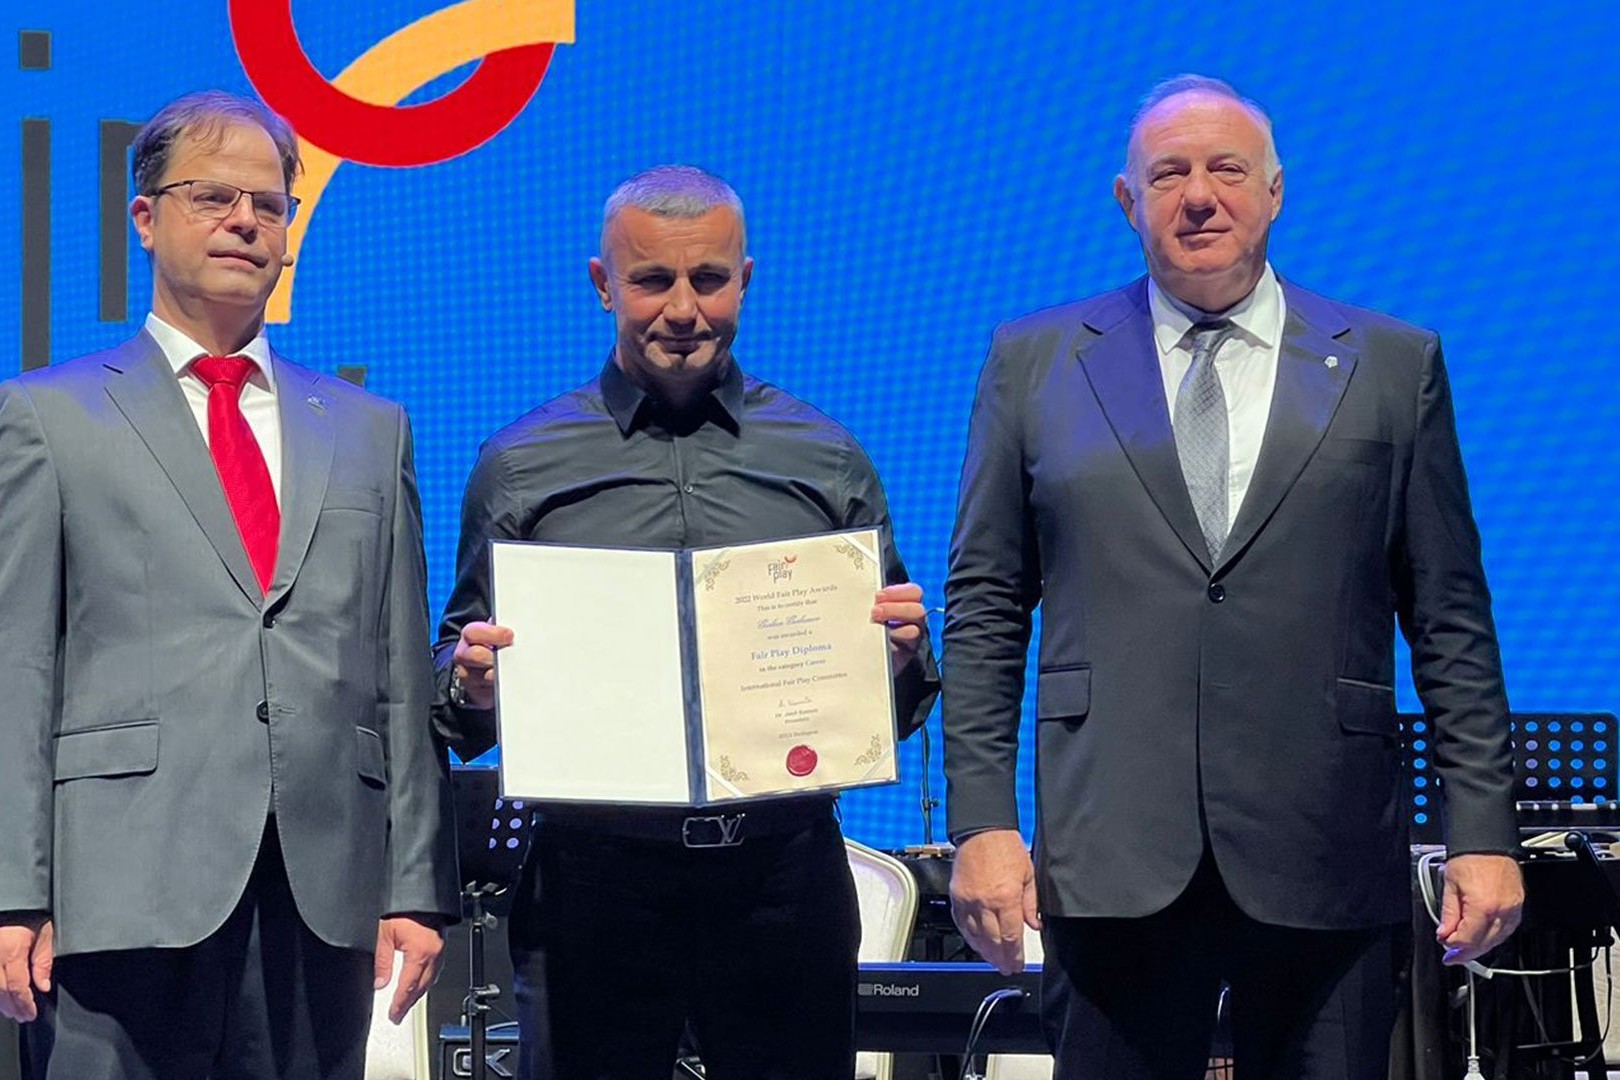 "Jean Borotra World Fair Play Career" award was presented to Gurban Gurbanov